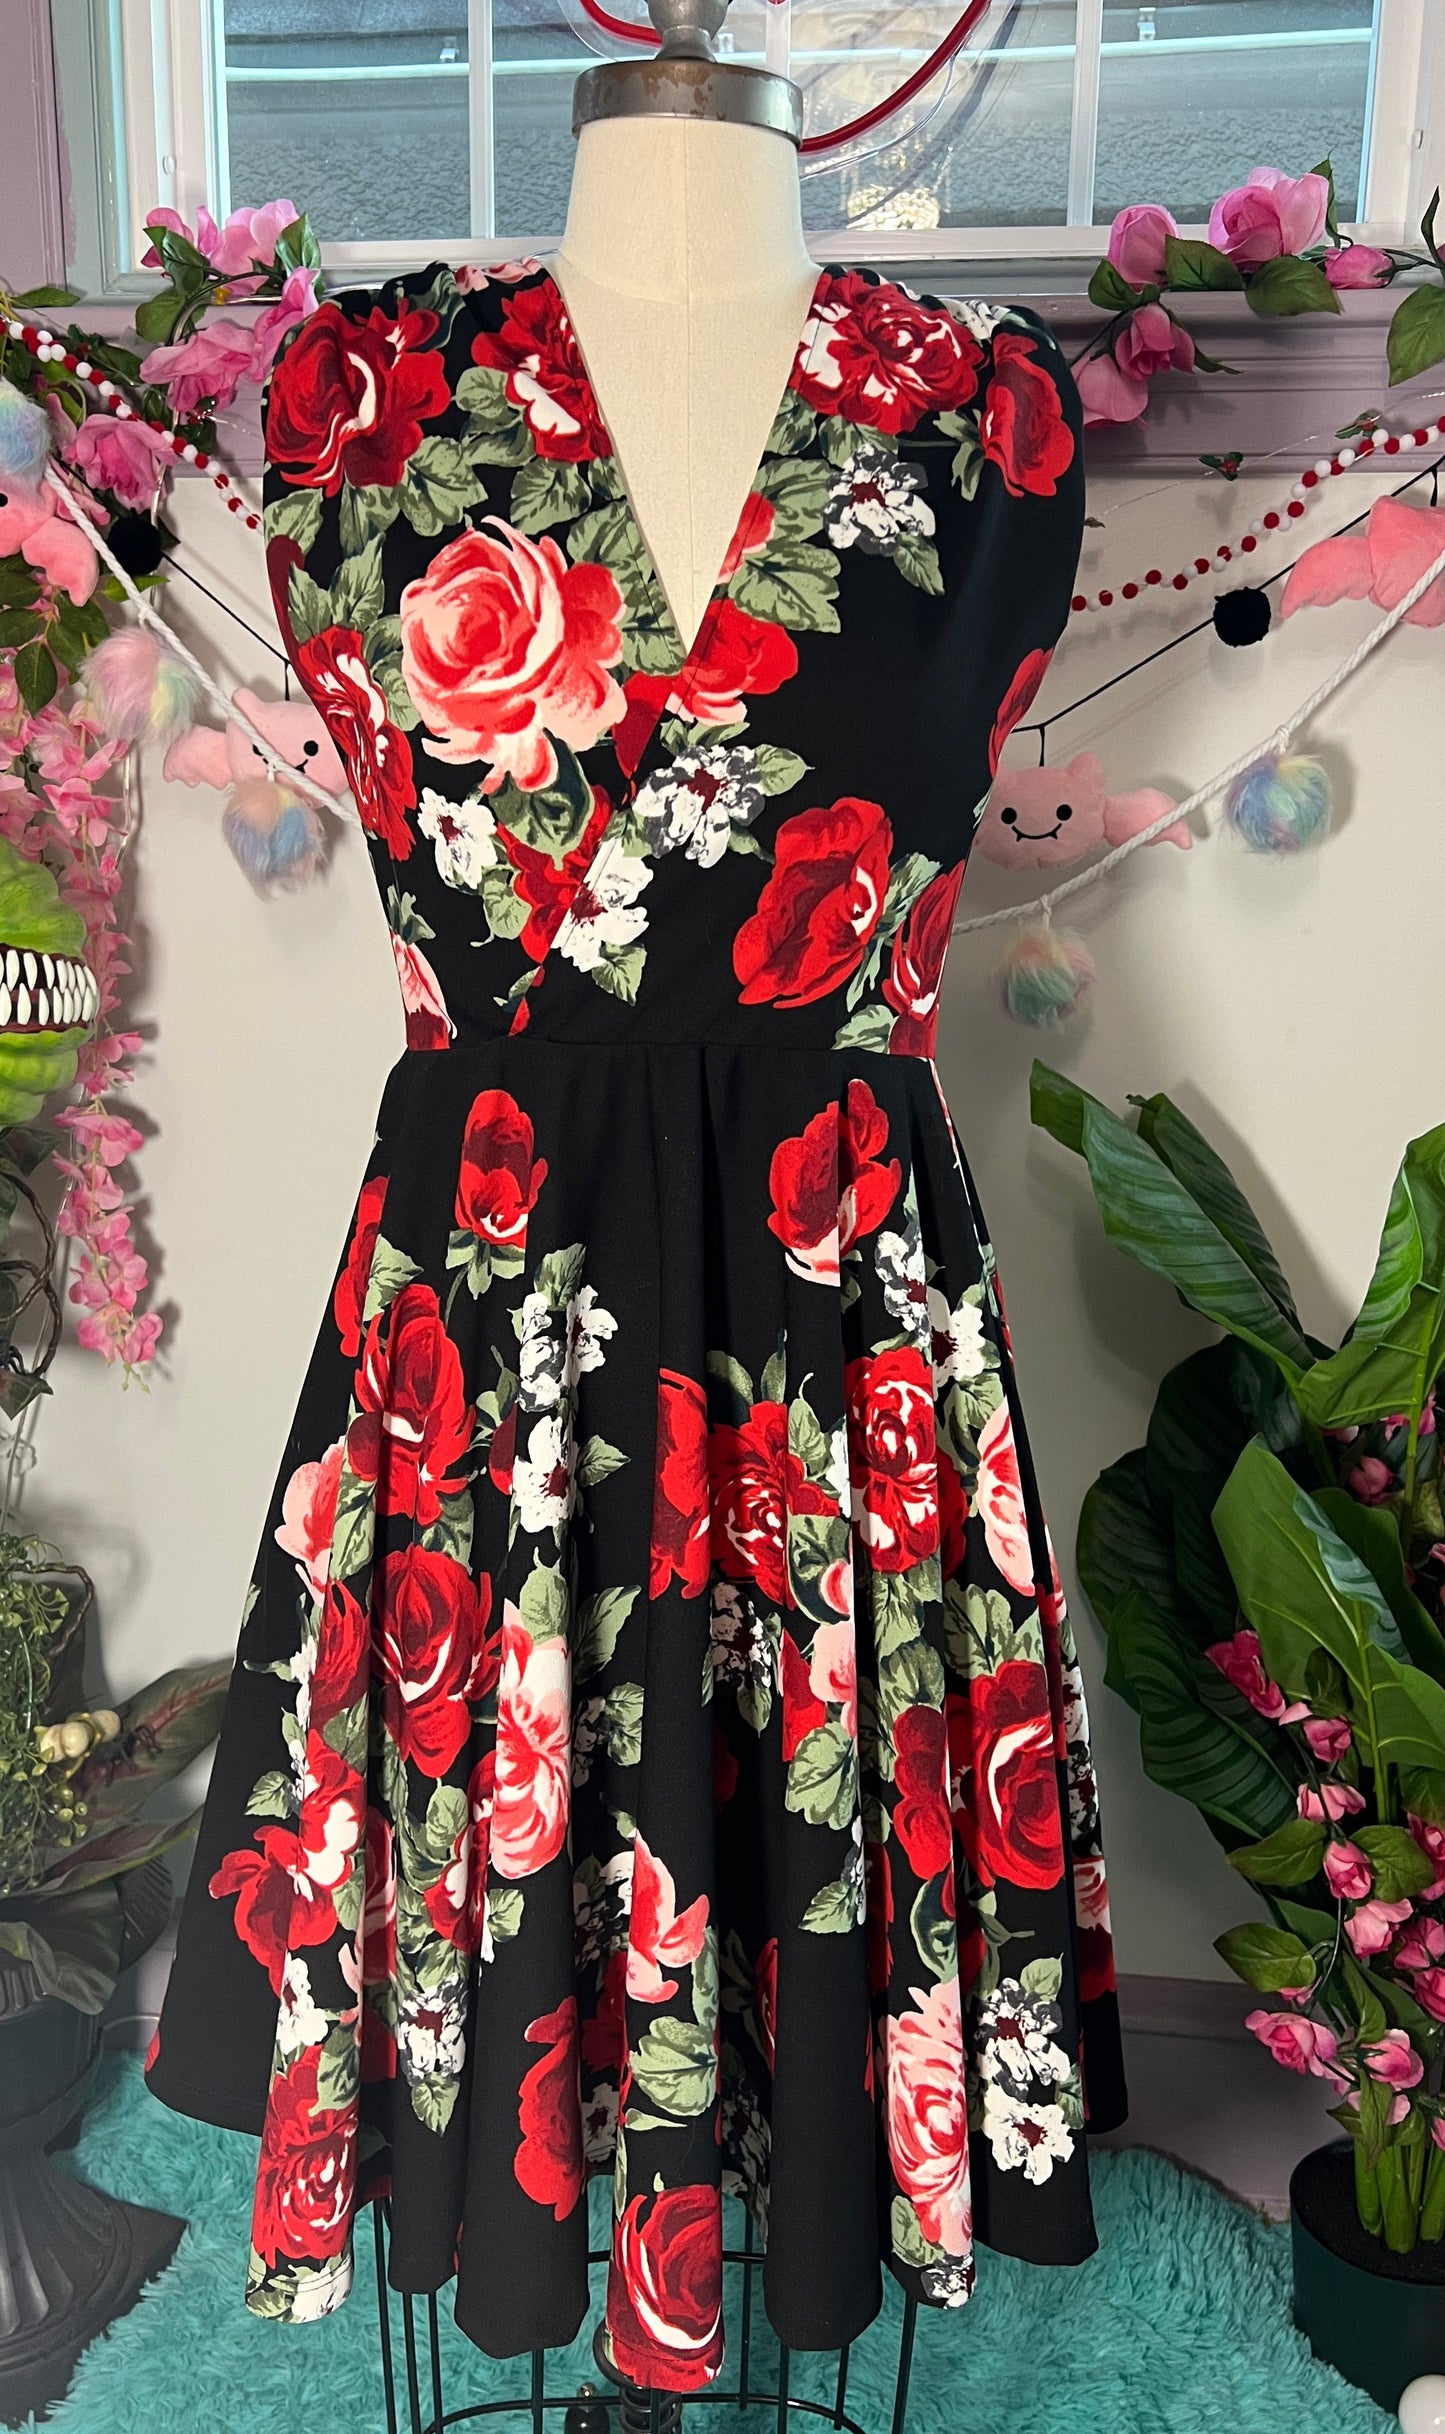 Persephone Rose Dress SAMPLE SIZE M